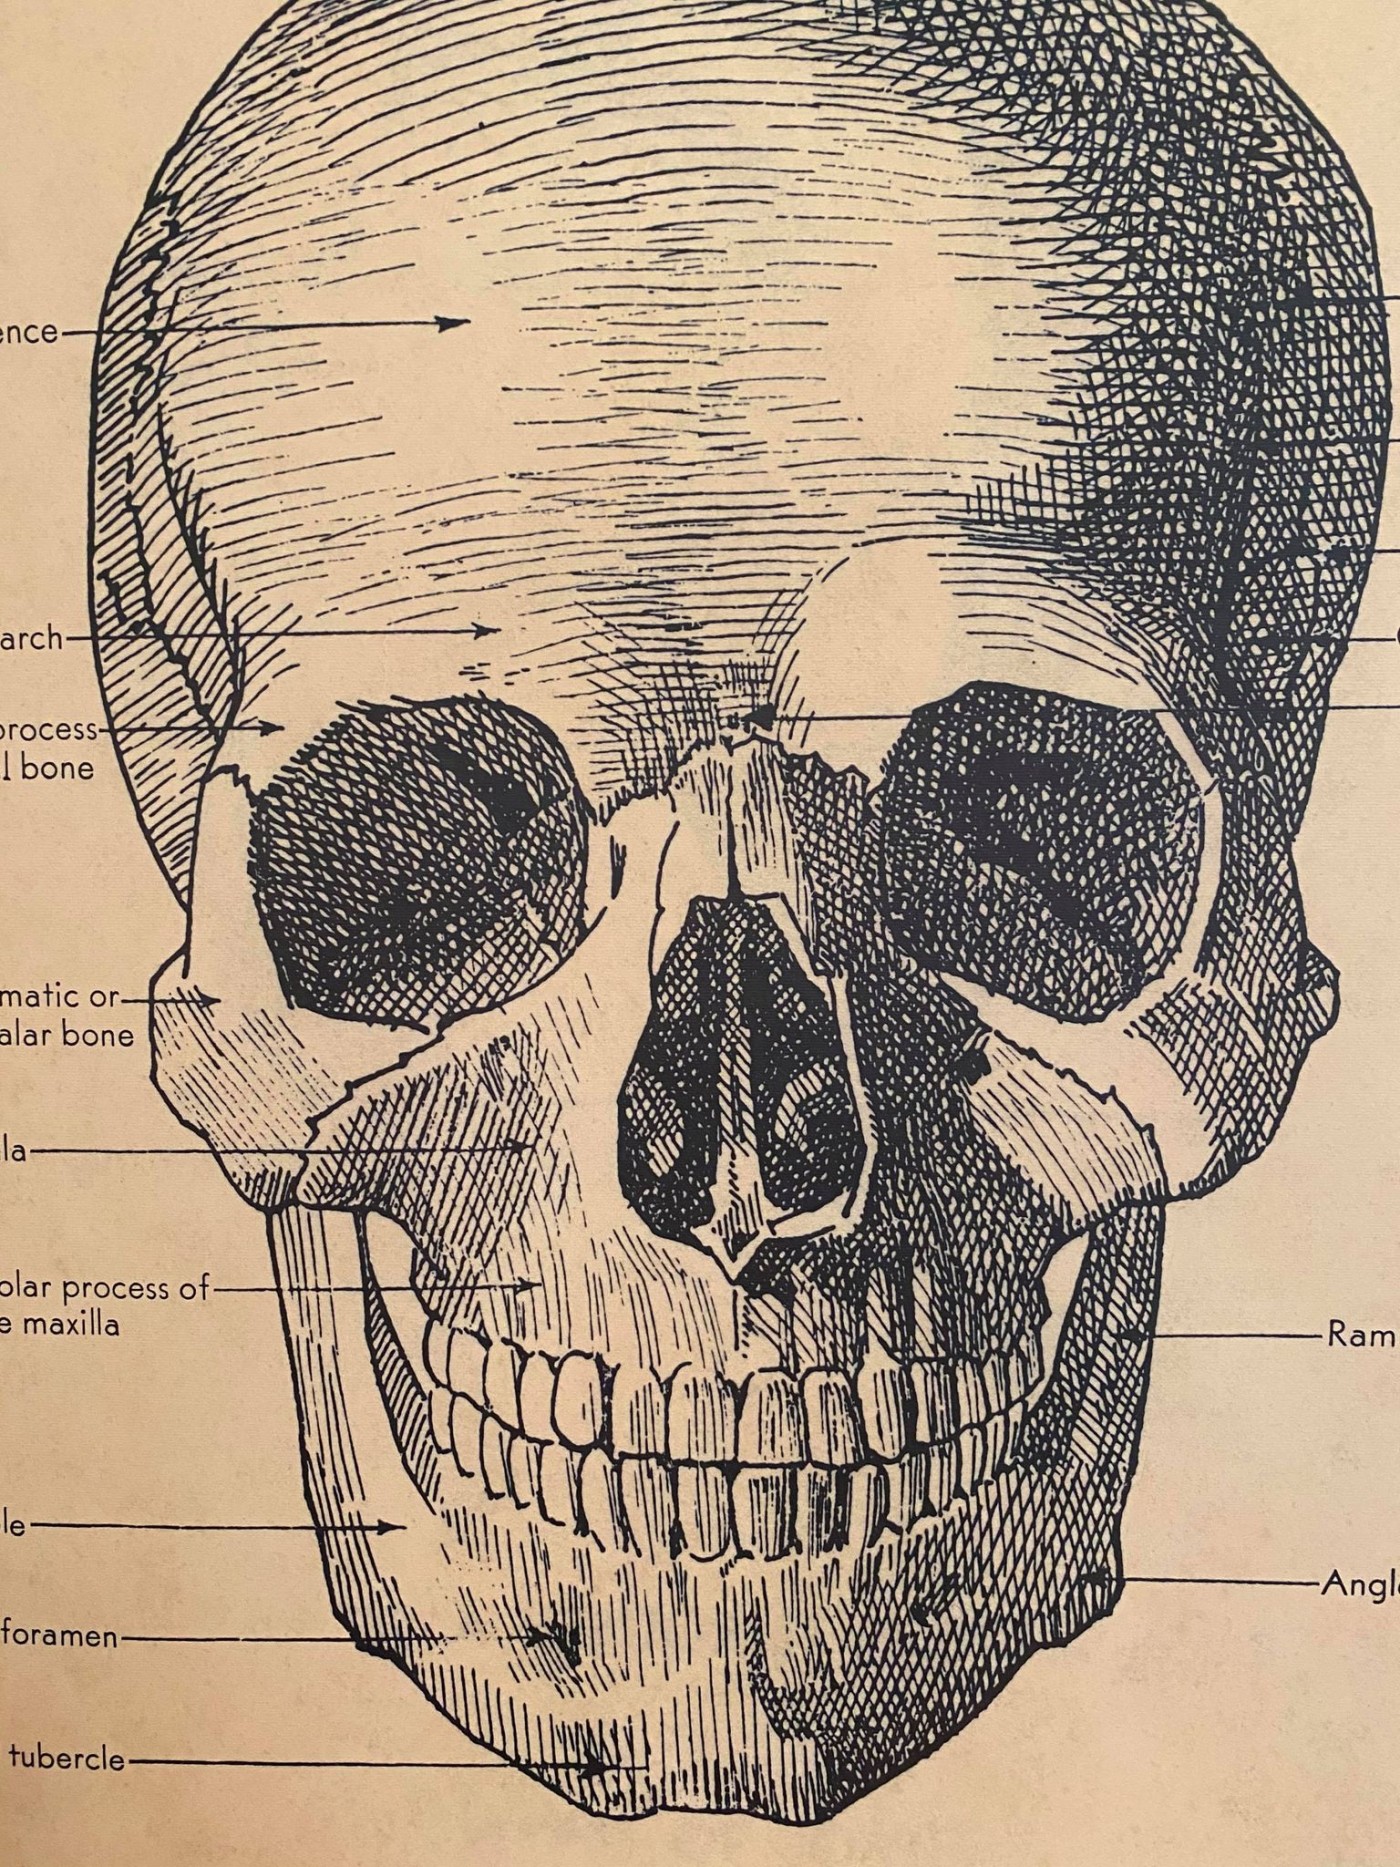 Poster of a skull